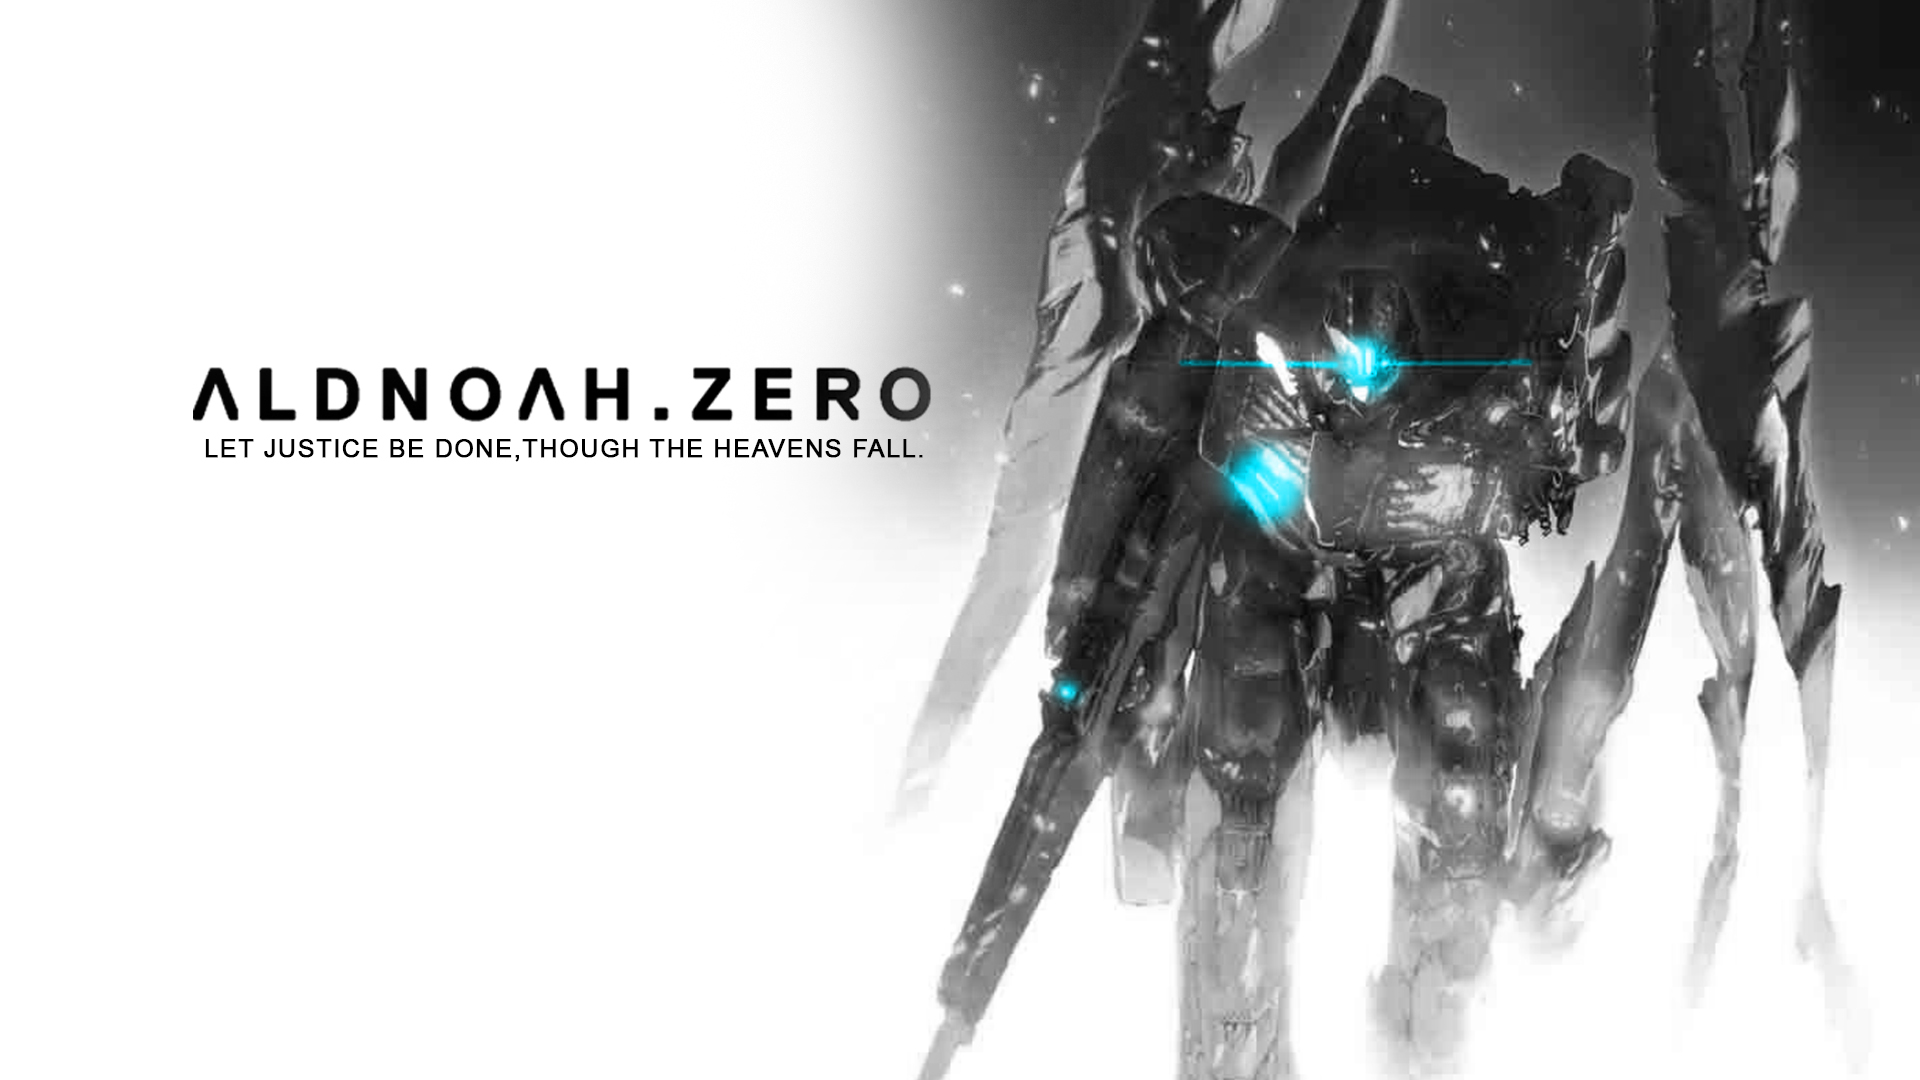 Anime Aldnoah.Zero HD Wallpaper | Background Image